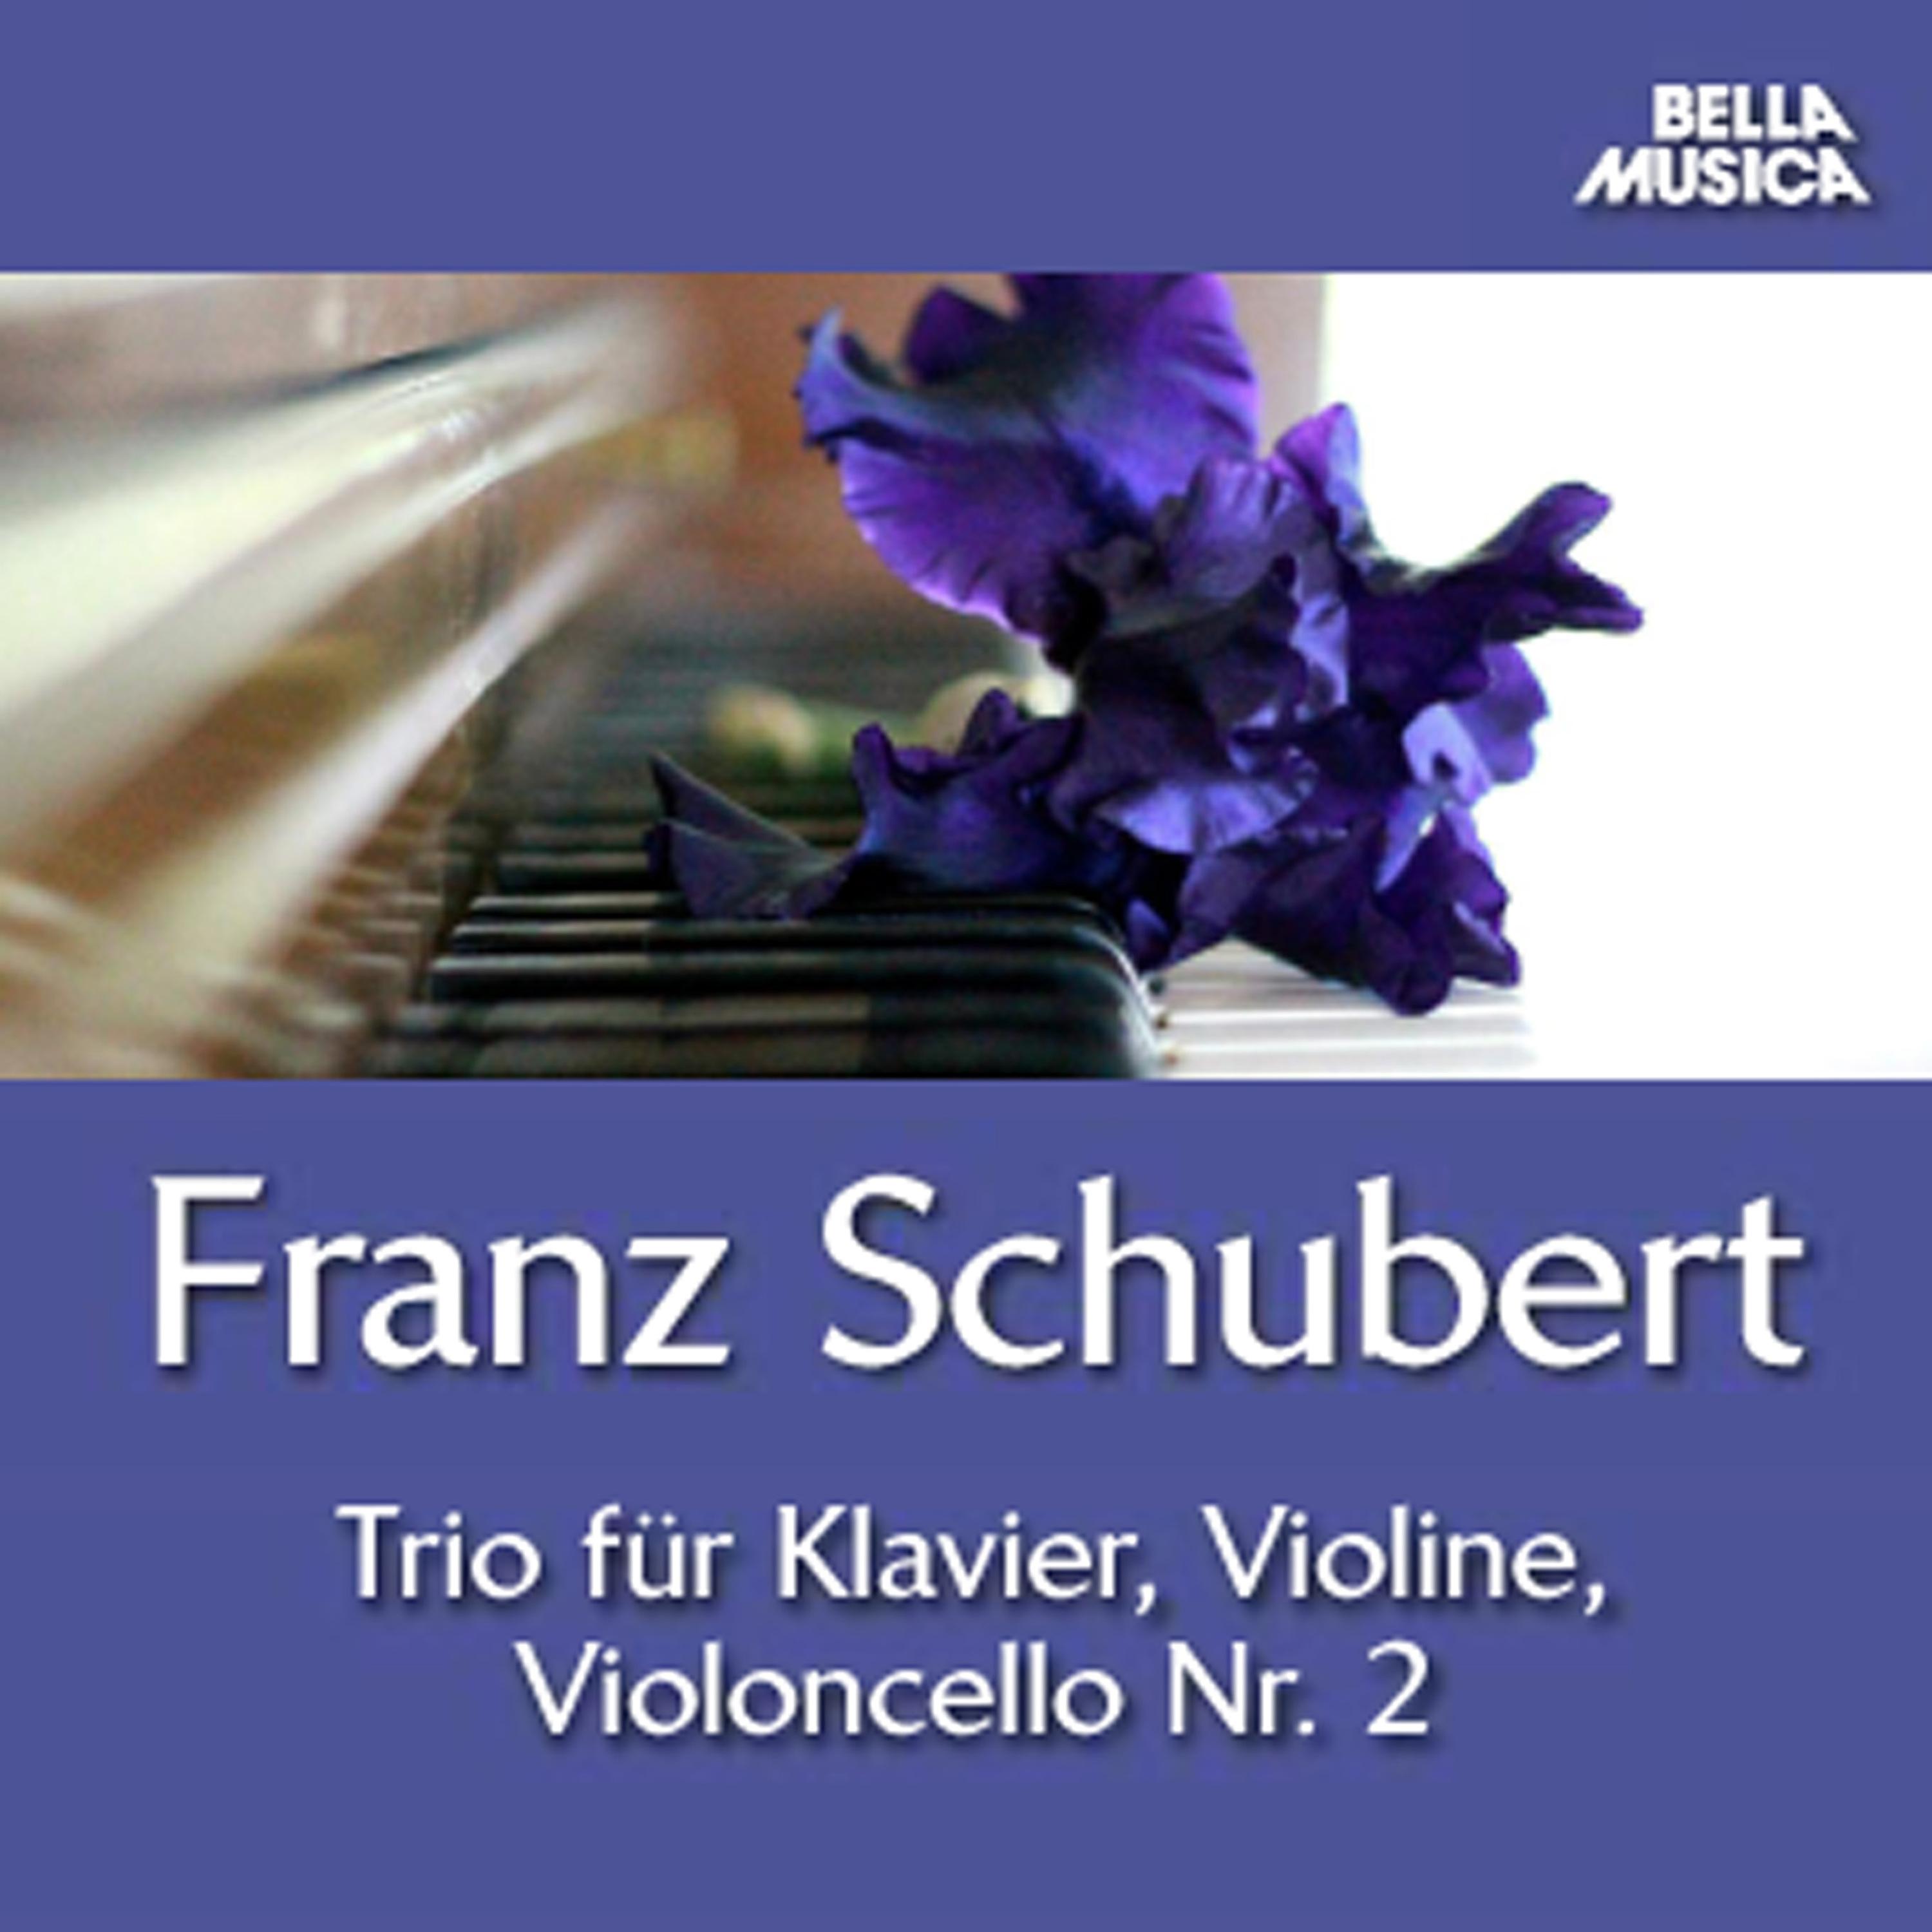 Fortepianotrio Florestan - Trio No. 2 für Klavier, Violine u. Violoncello in E-Flat Major, D. 929: III. Scherzando - Allegro moderato